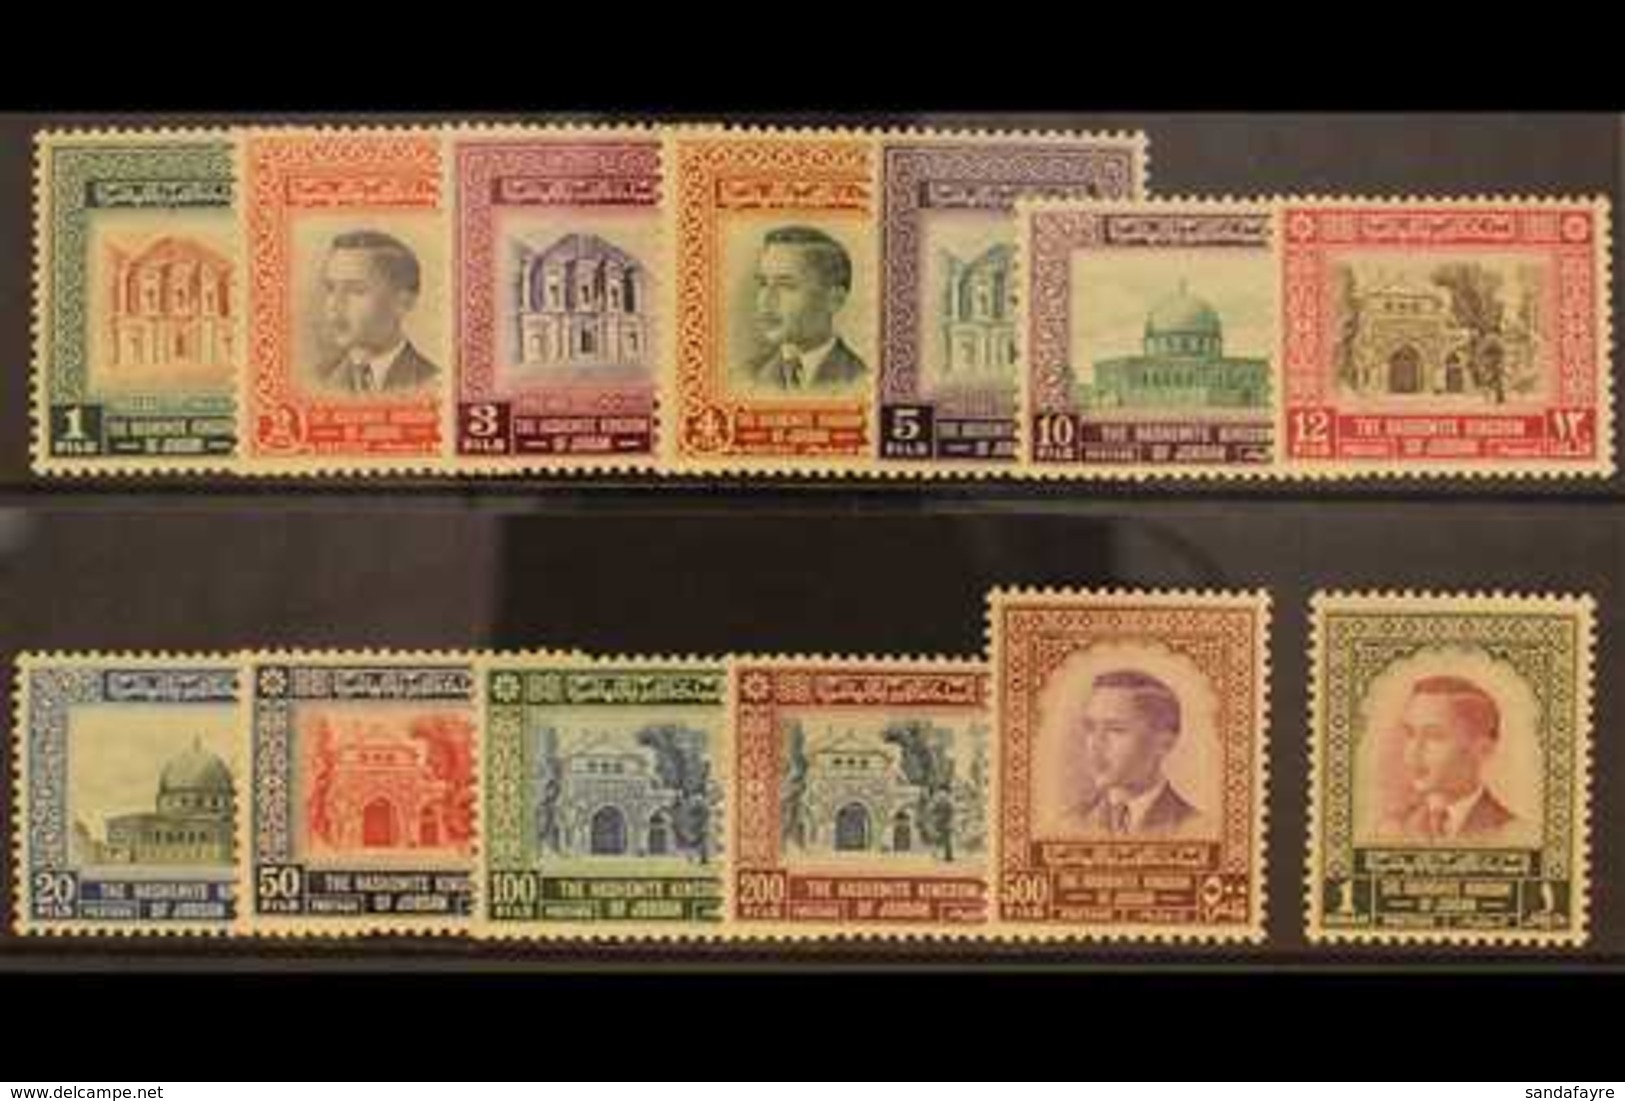 1954 Hussein Pictorial, No Wmk Complete Set, SG 419/431, Never Hinged Mint (13 Stamps) For More Images, Please Visit Htt - Jordanien